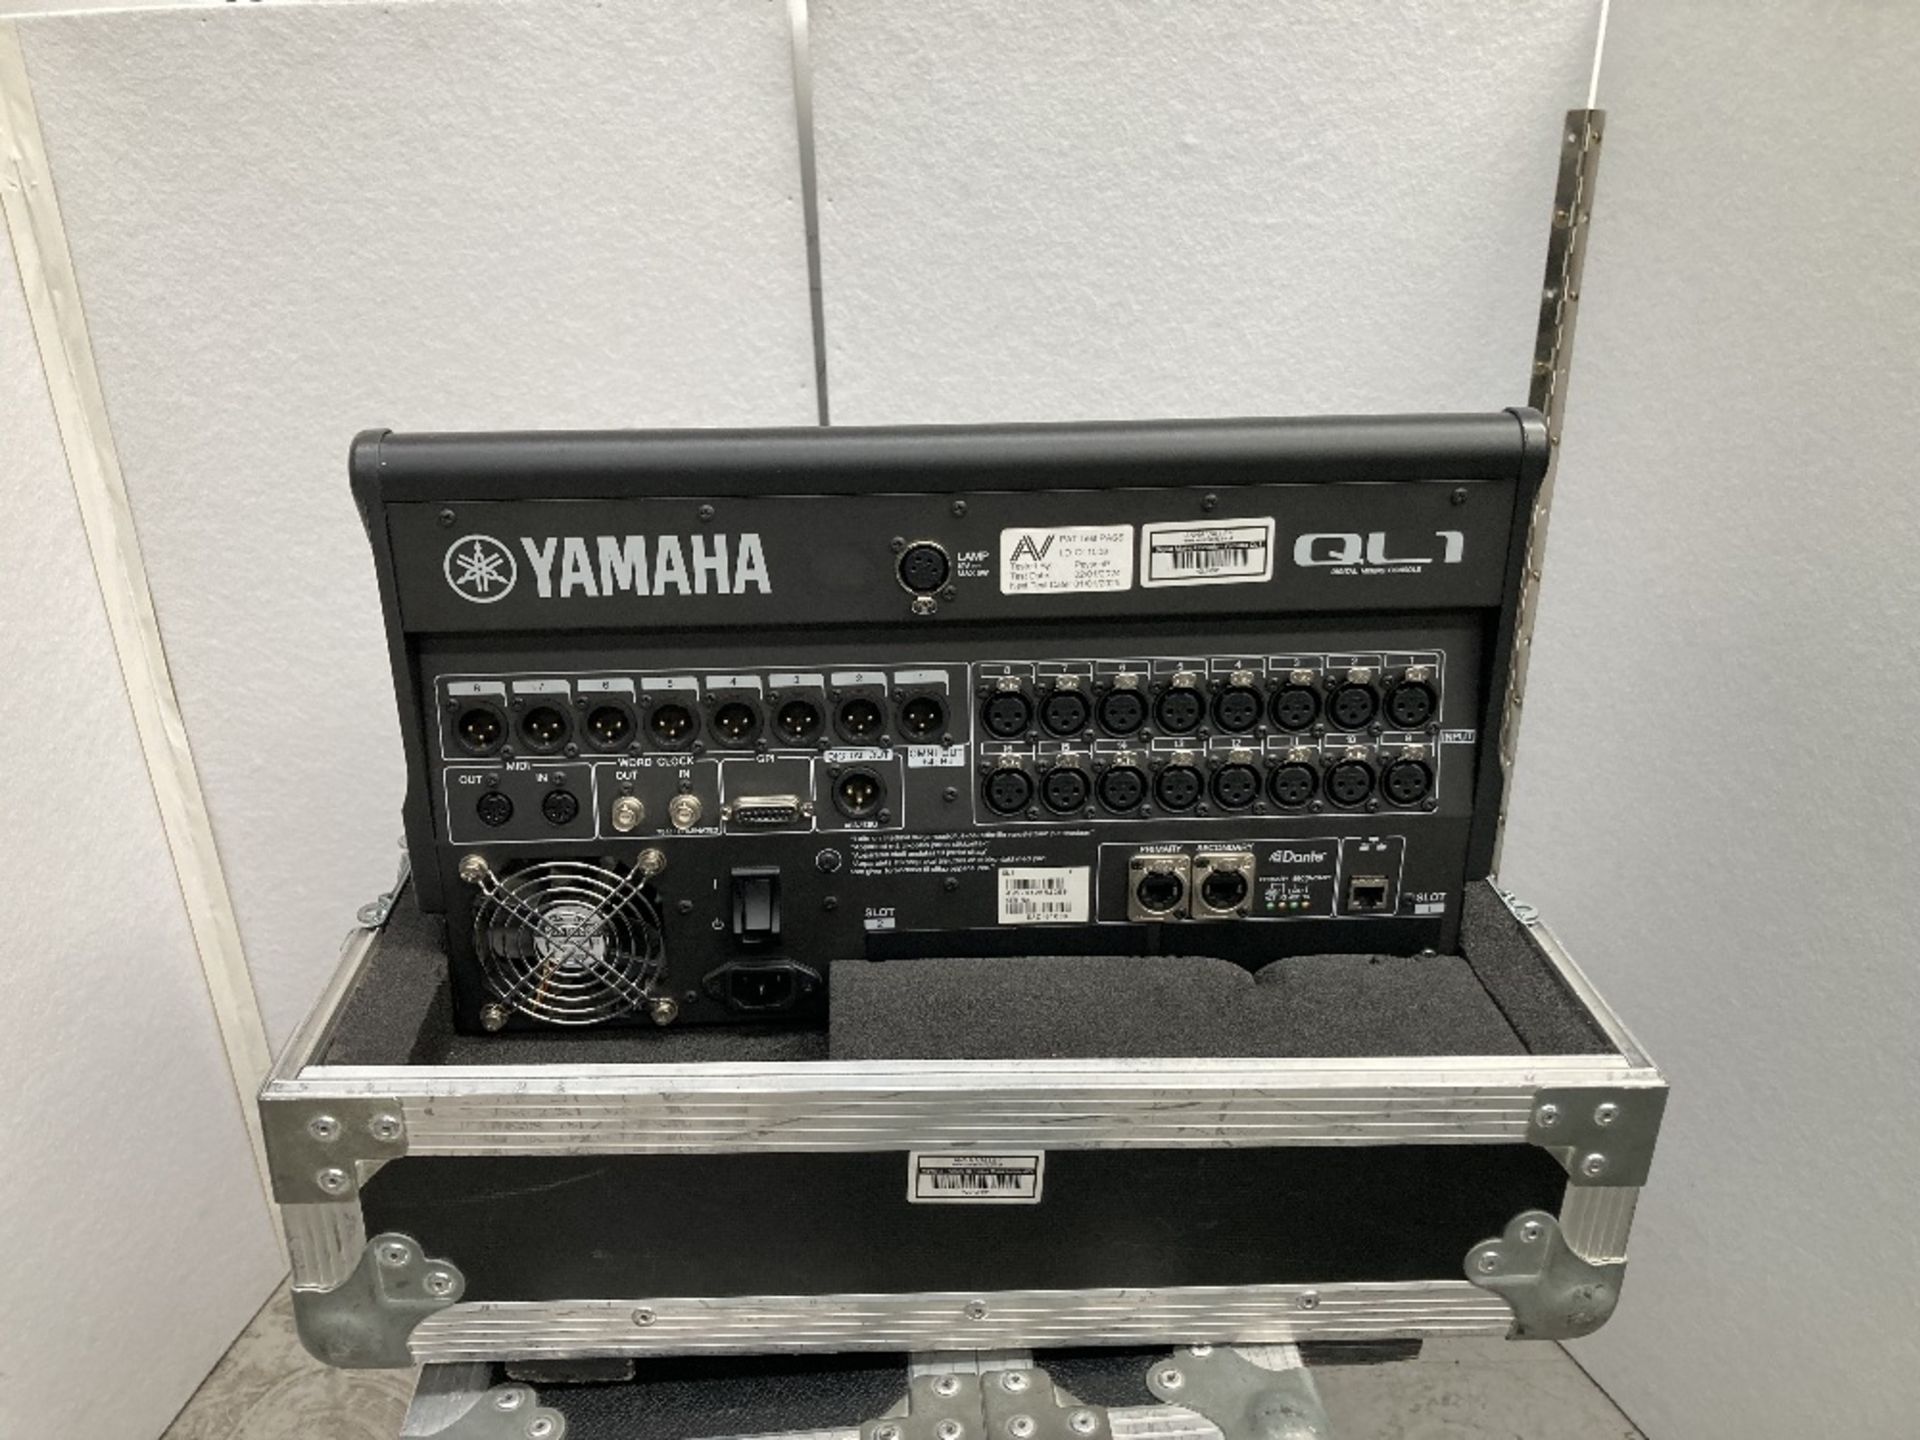 Yamaha QL1 Digital Mixing Console & Heavy Duty Mobile Flight Case - Image 5 of 14